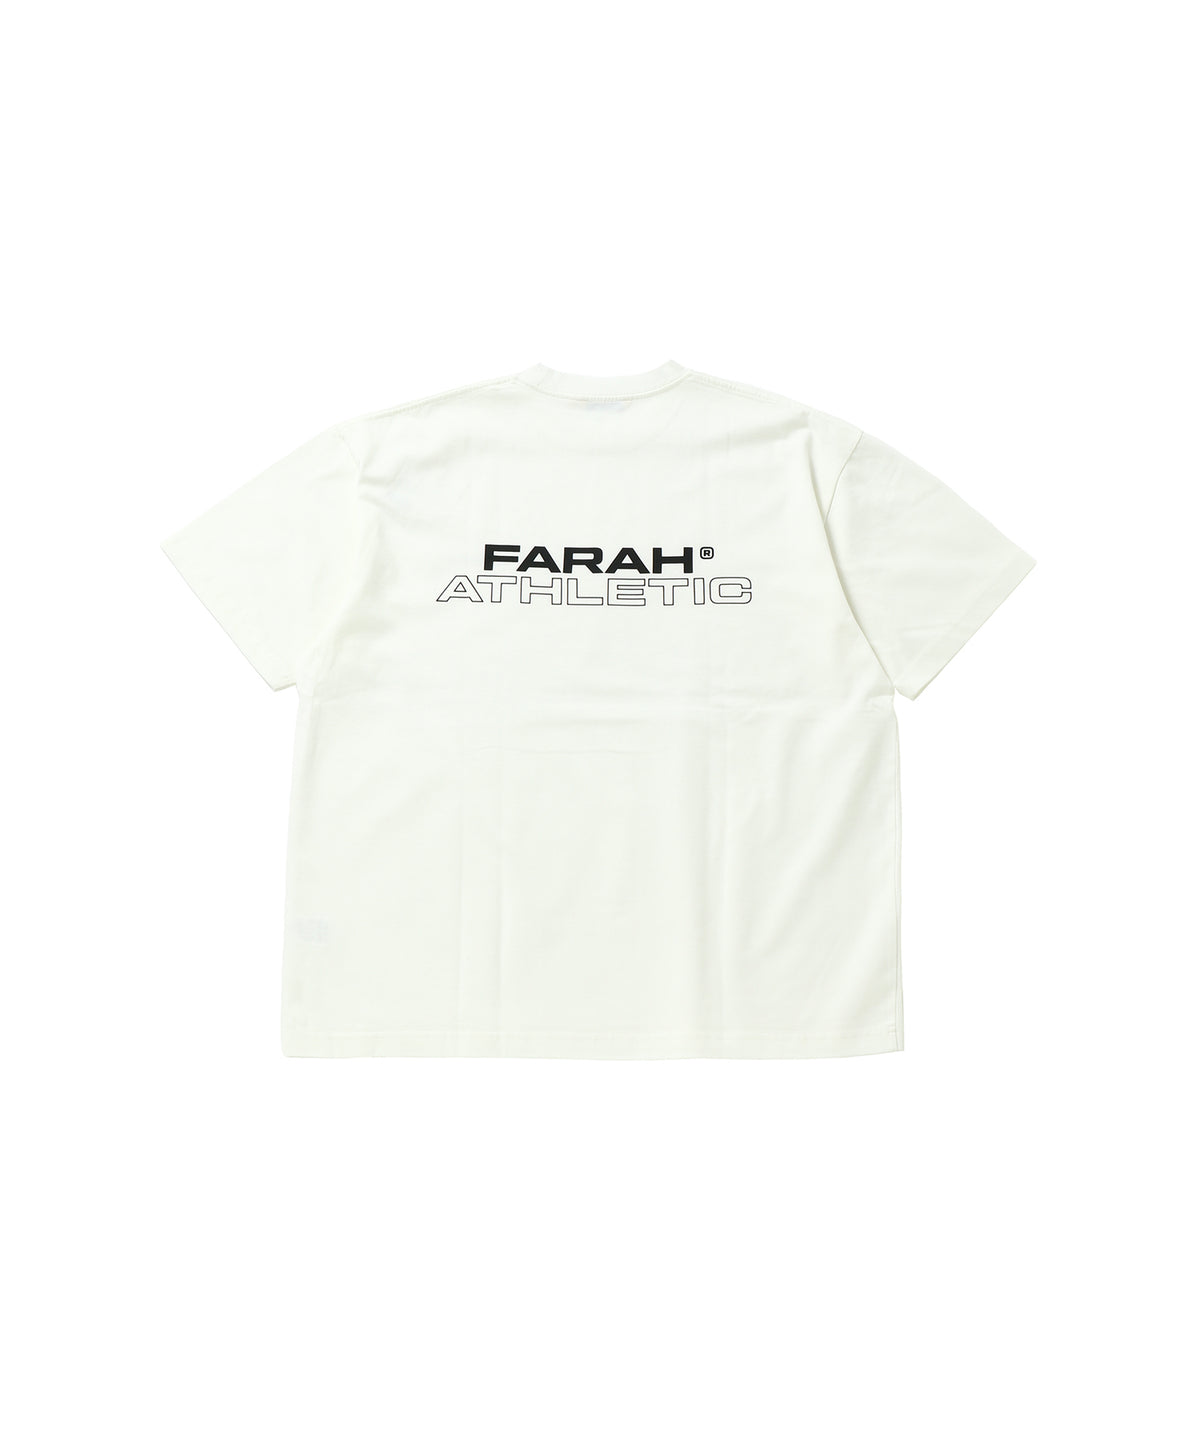 Printed Graphic T-Shirt Farah